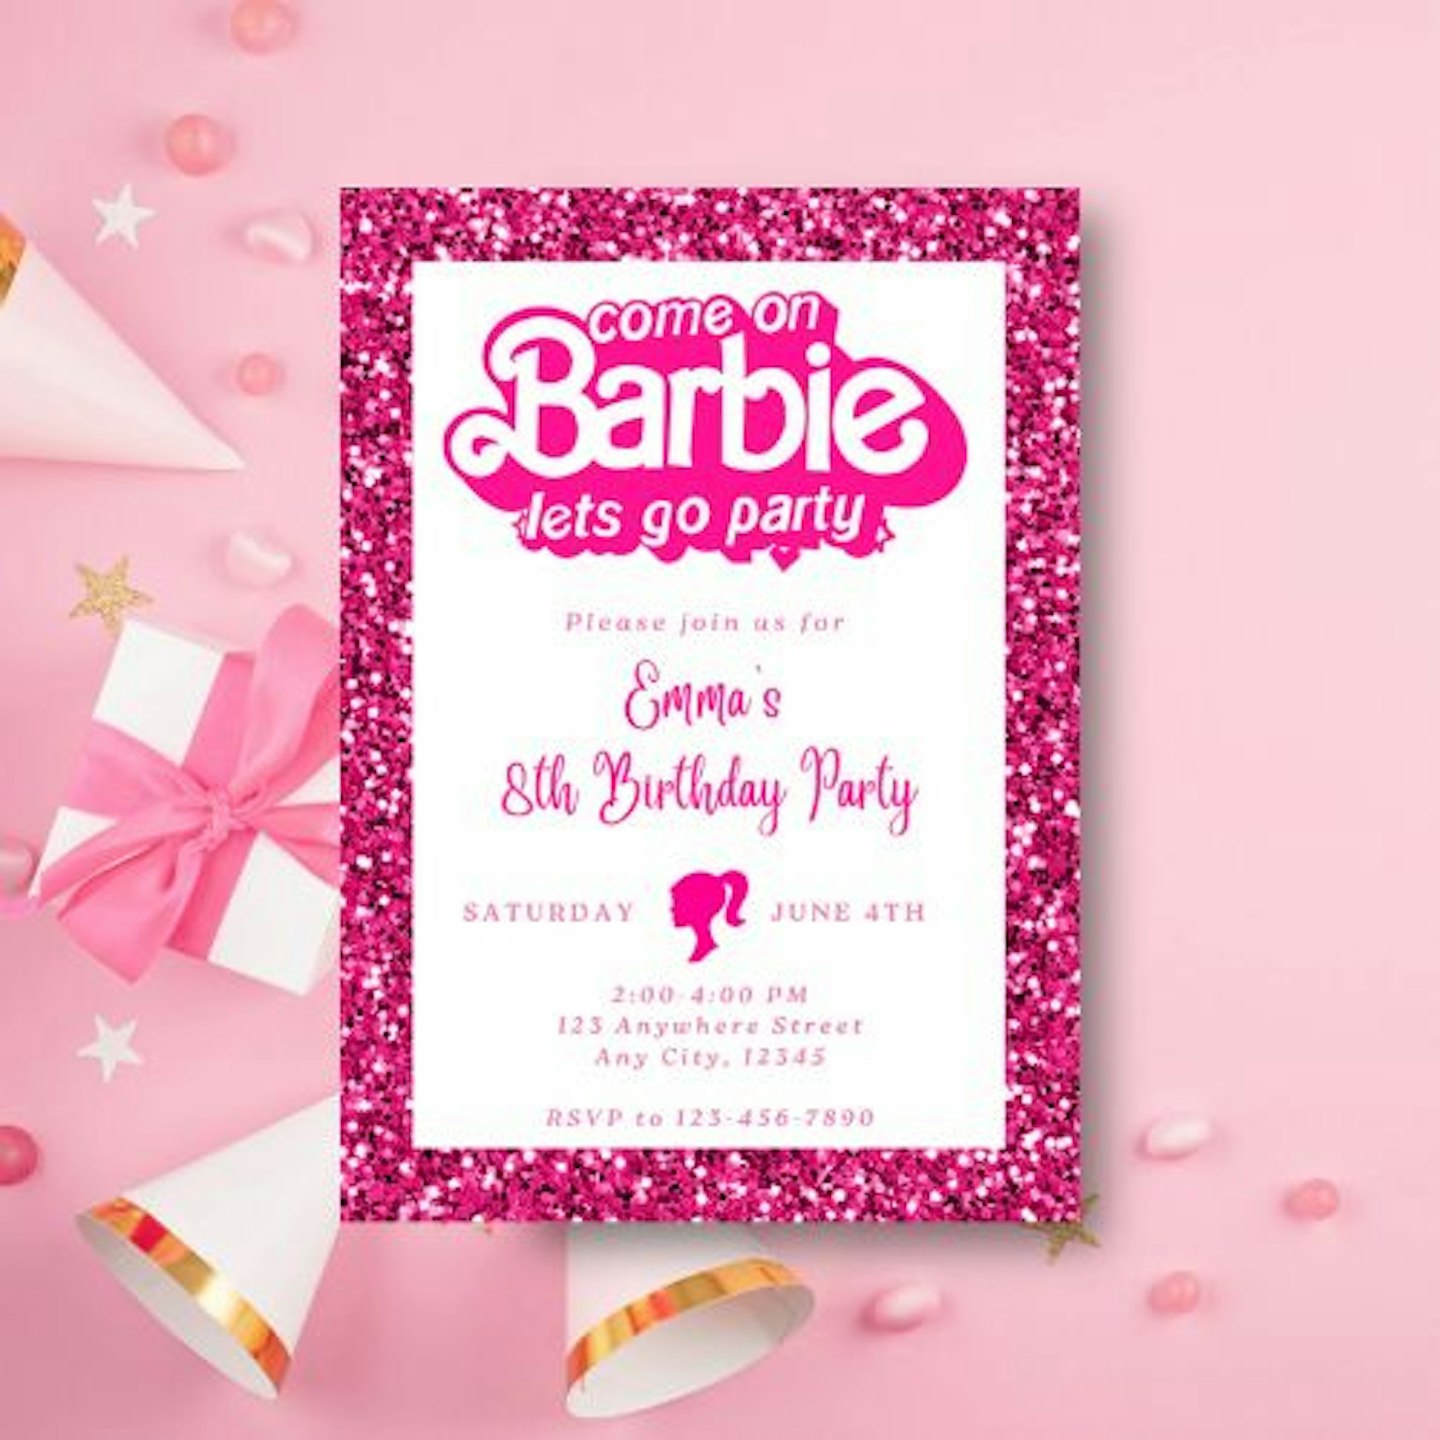 Young Kids Birthday  Barbie theme party, Barbie birthday party, Barbie  party decorations